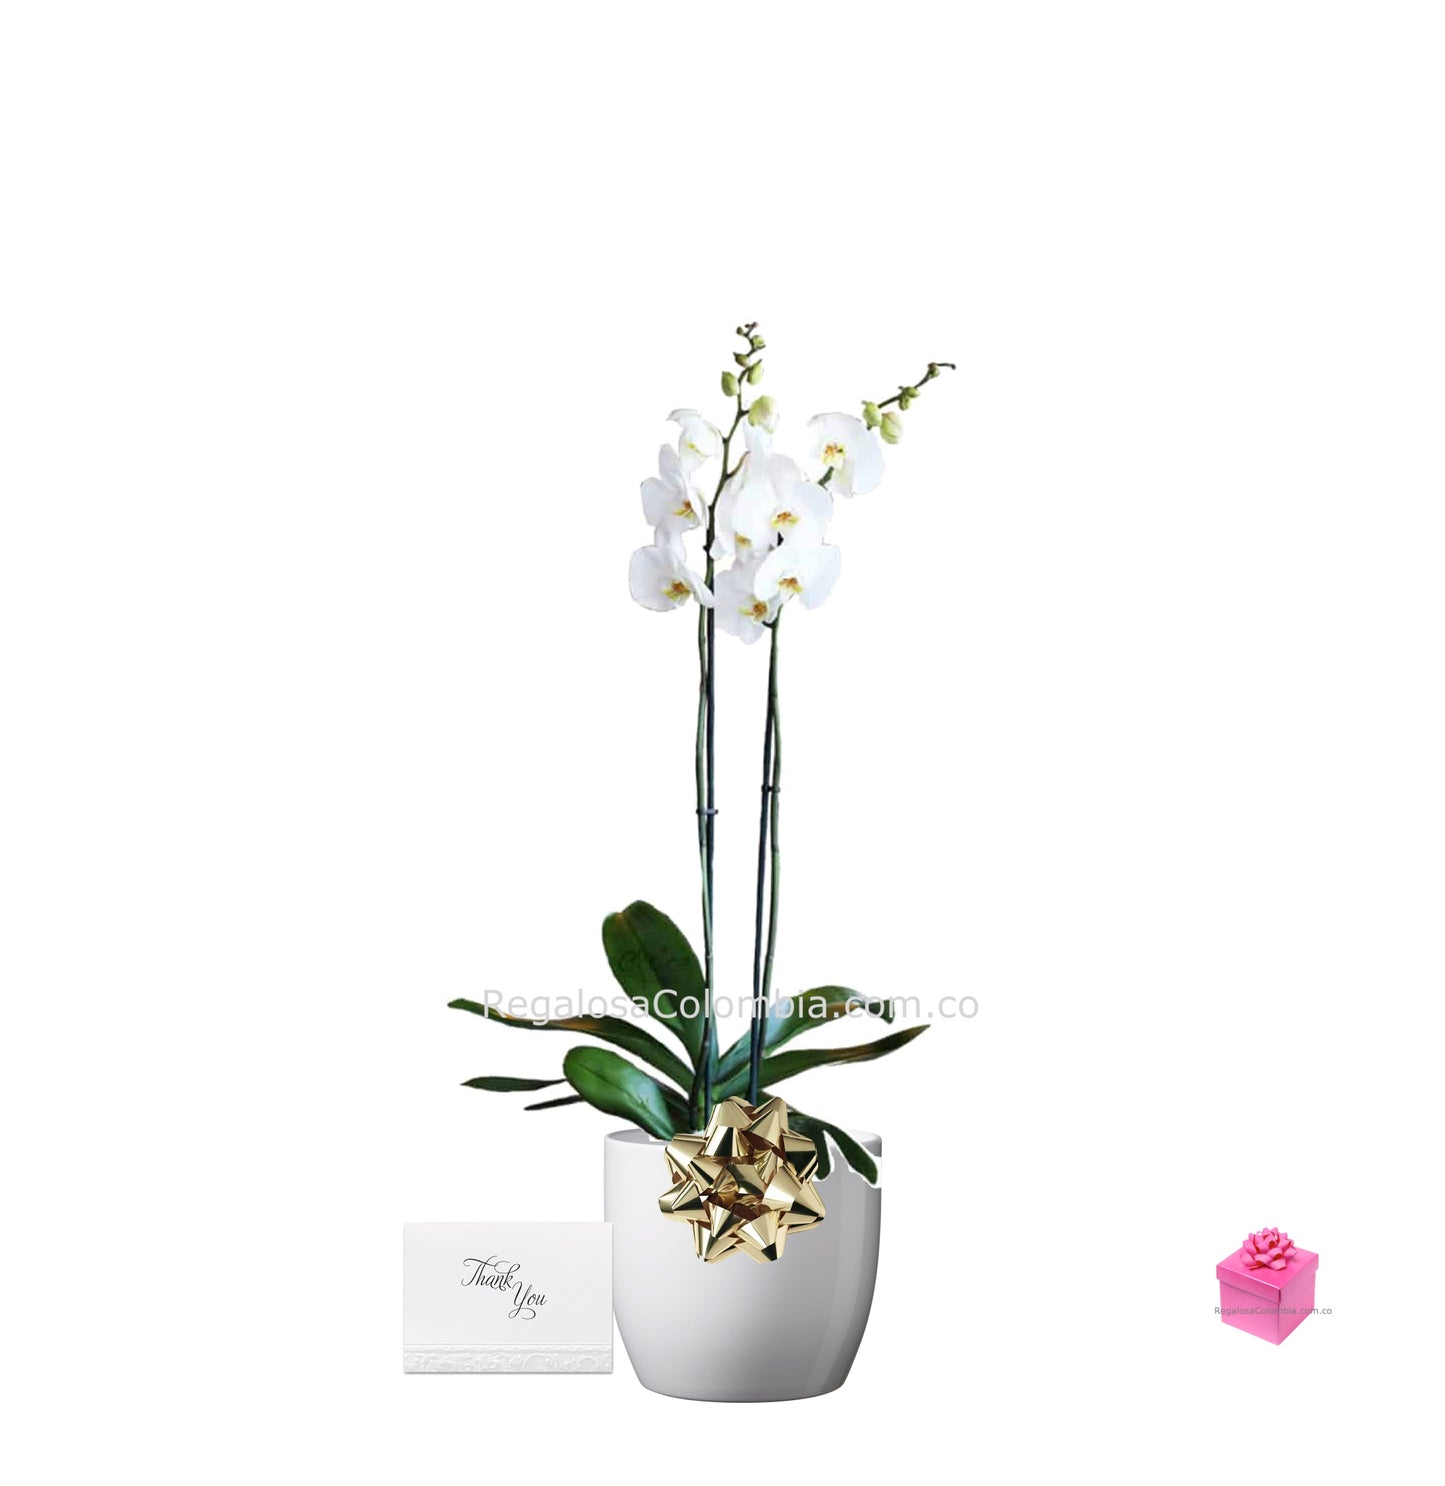 Enviar Orquídea Blanca a domicilio en Colombia. Bogotá, Cali, Medellín, Bucaramanga 